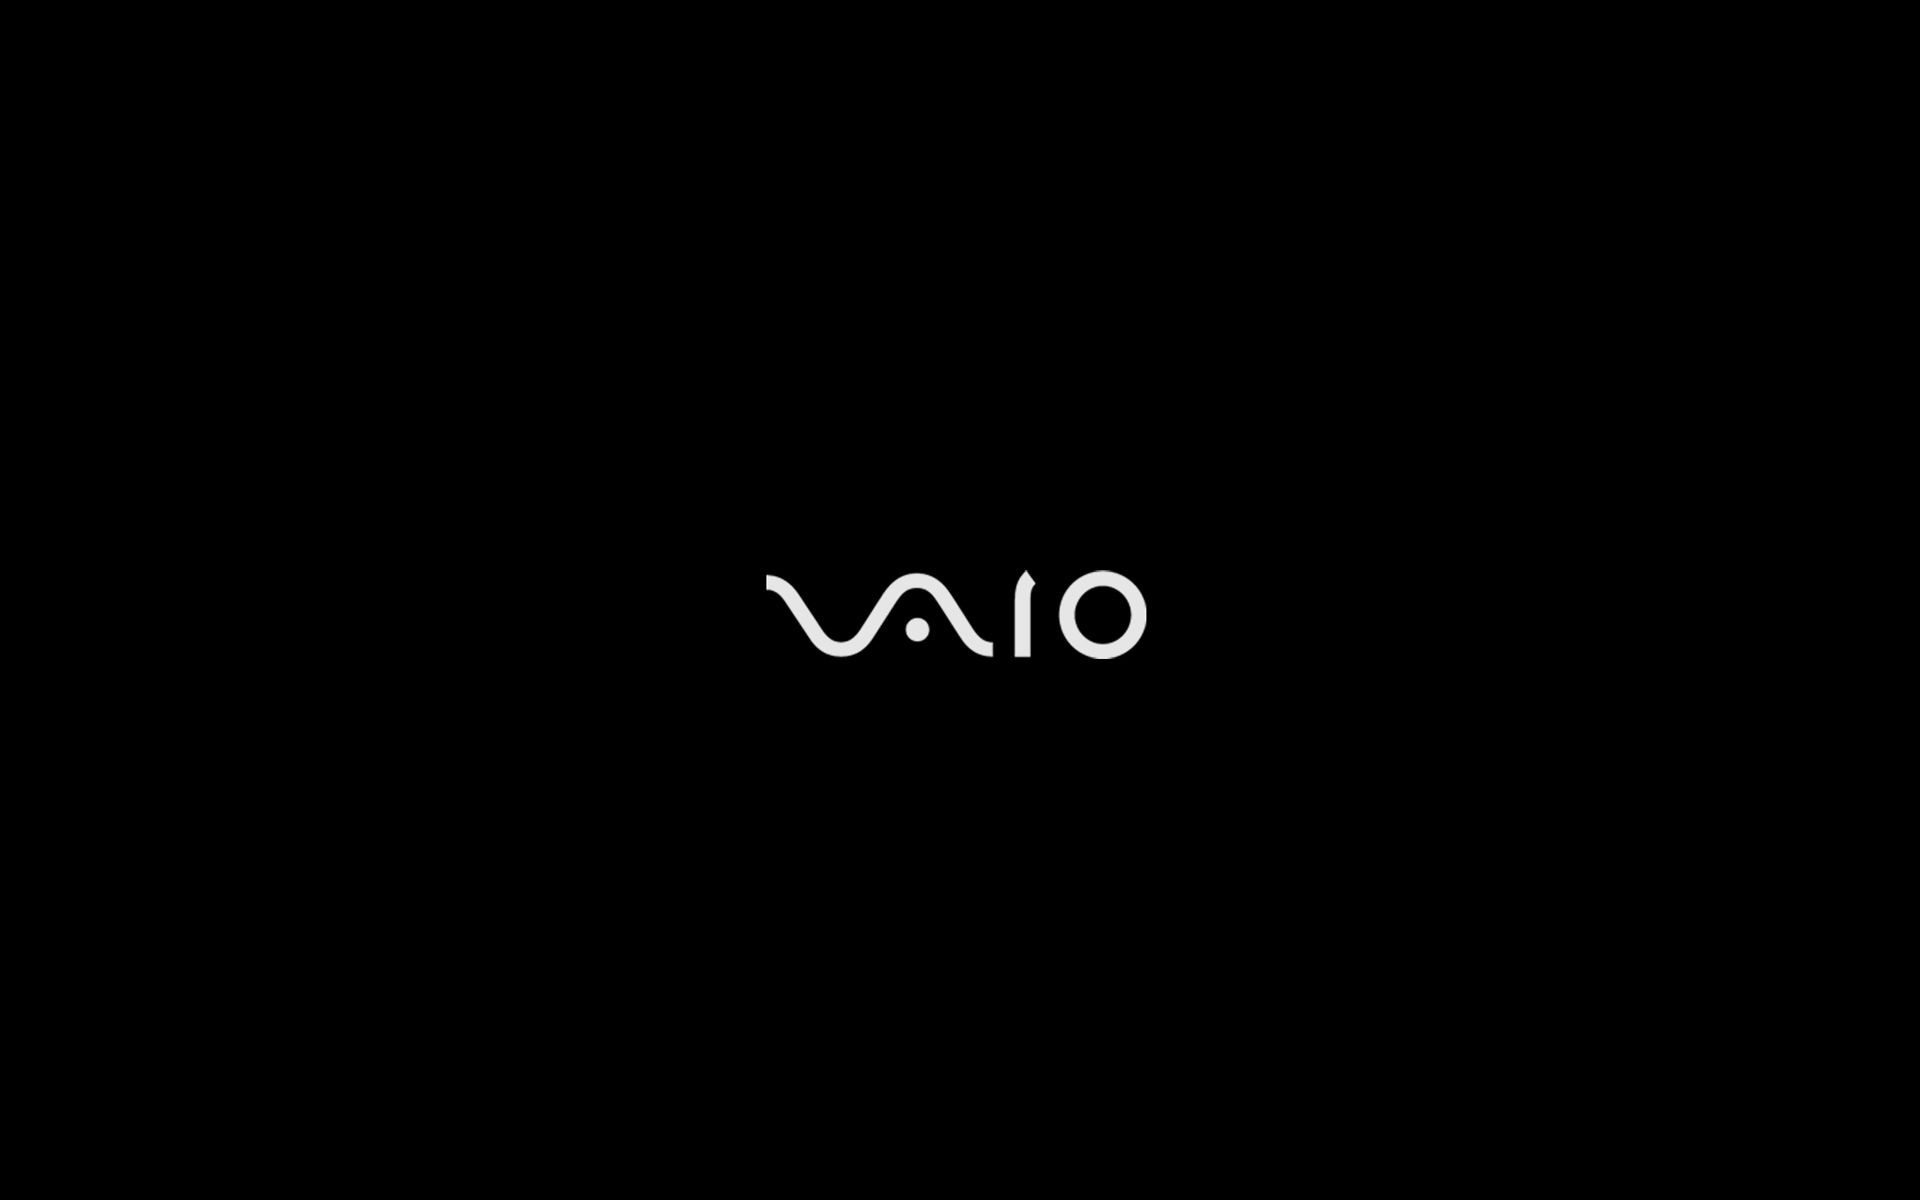 Vaio Black for 1920 x 1200 widescreen resolution